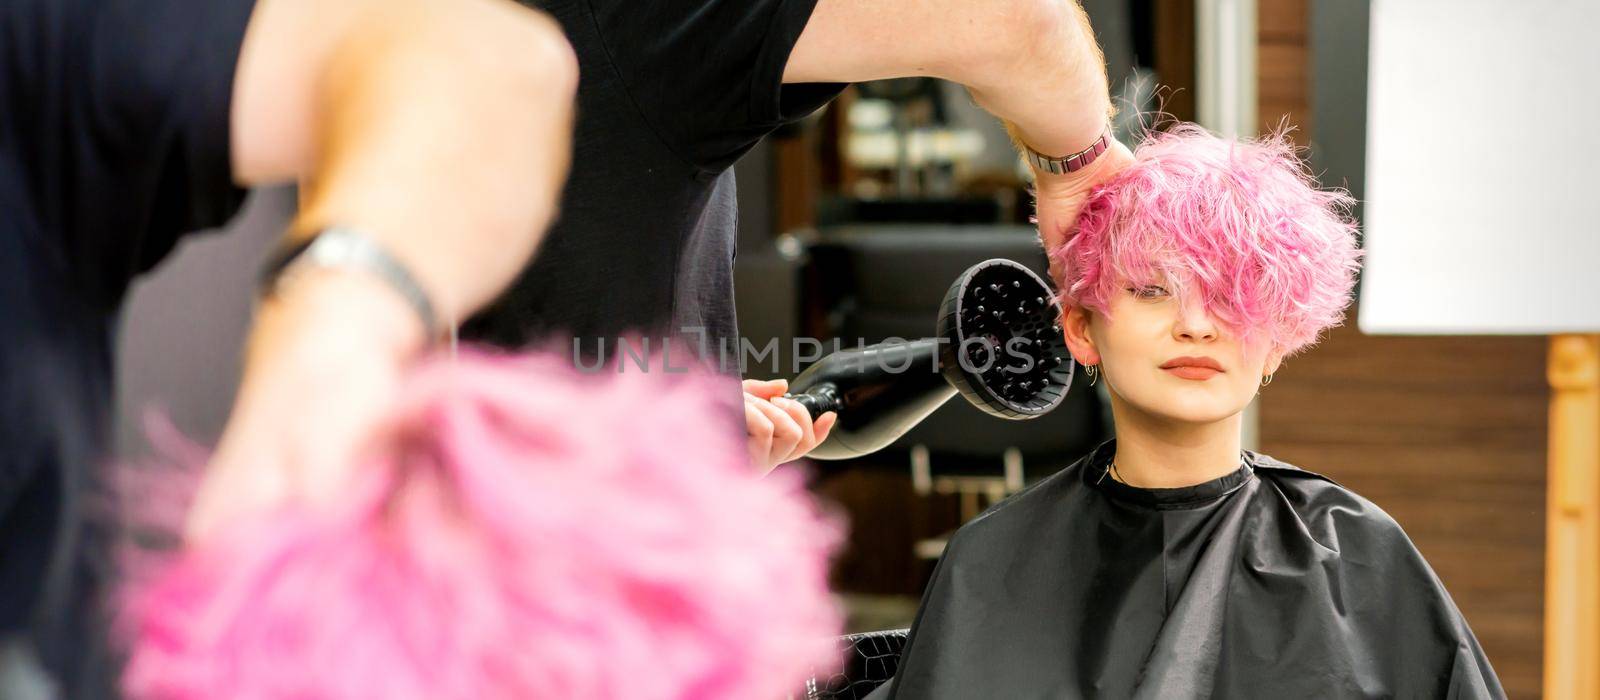 Hairdresser drying pink hair of client by okskukuruza